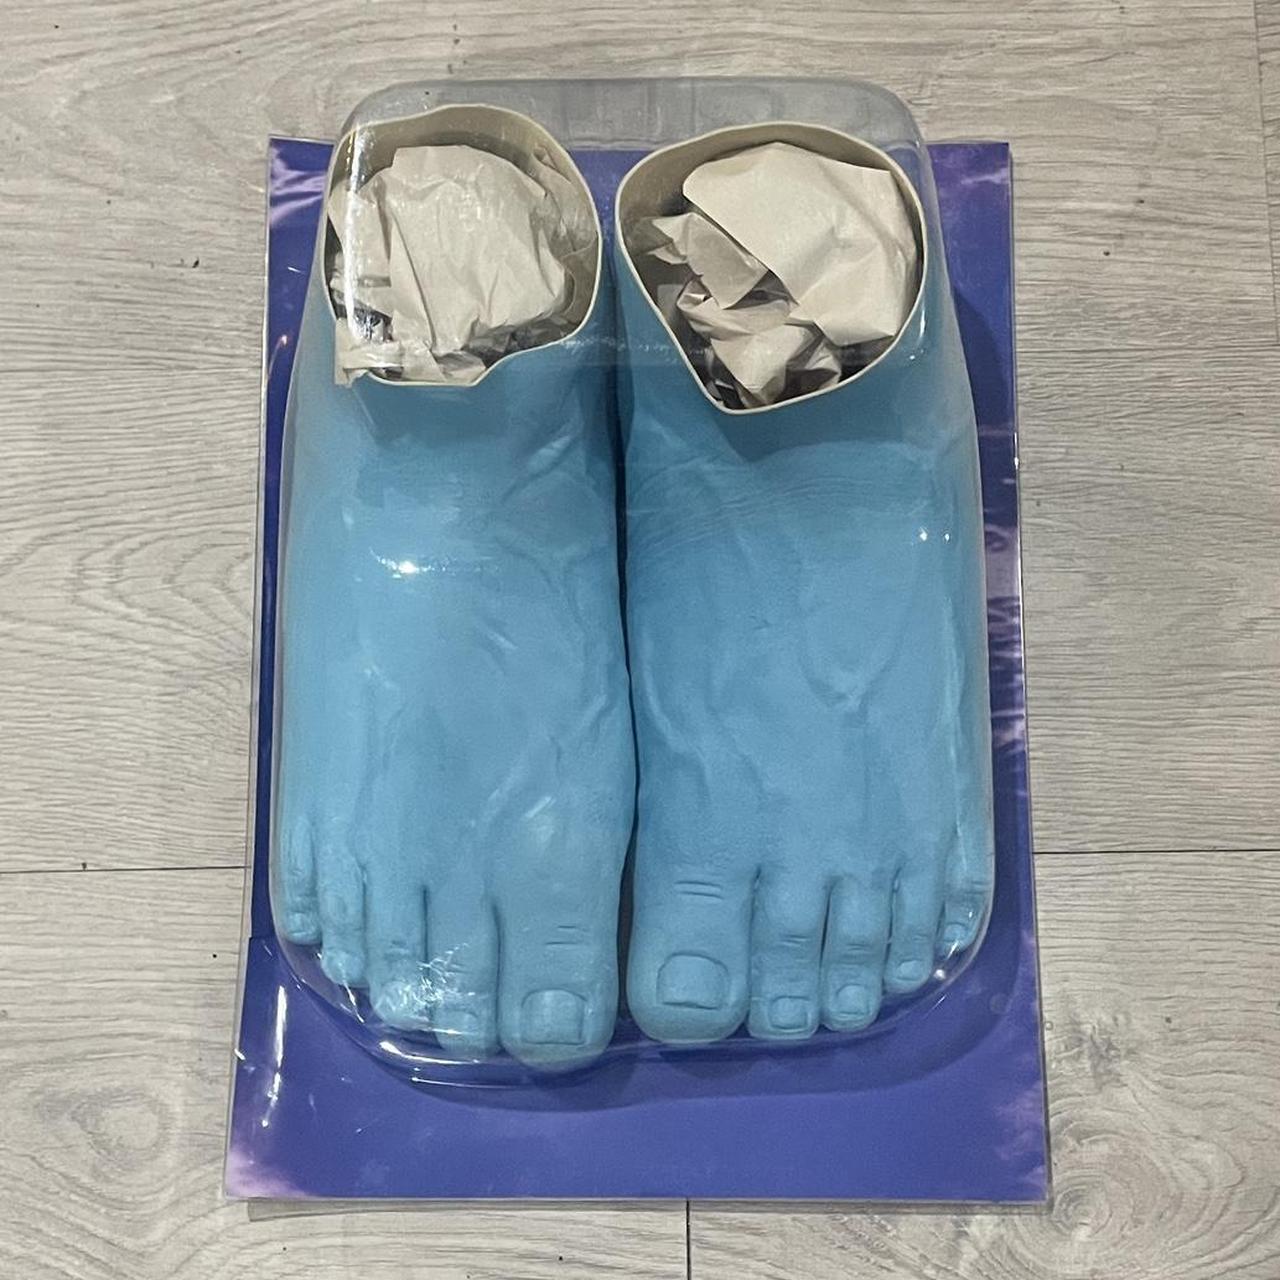 Imran Potato Men's Slippers - Blue - One Size